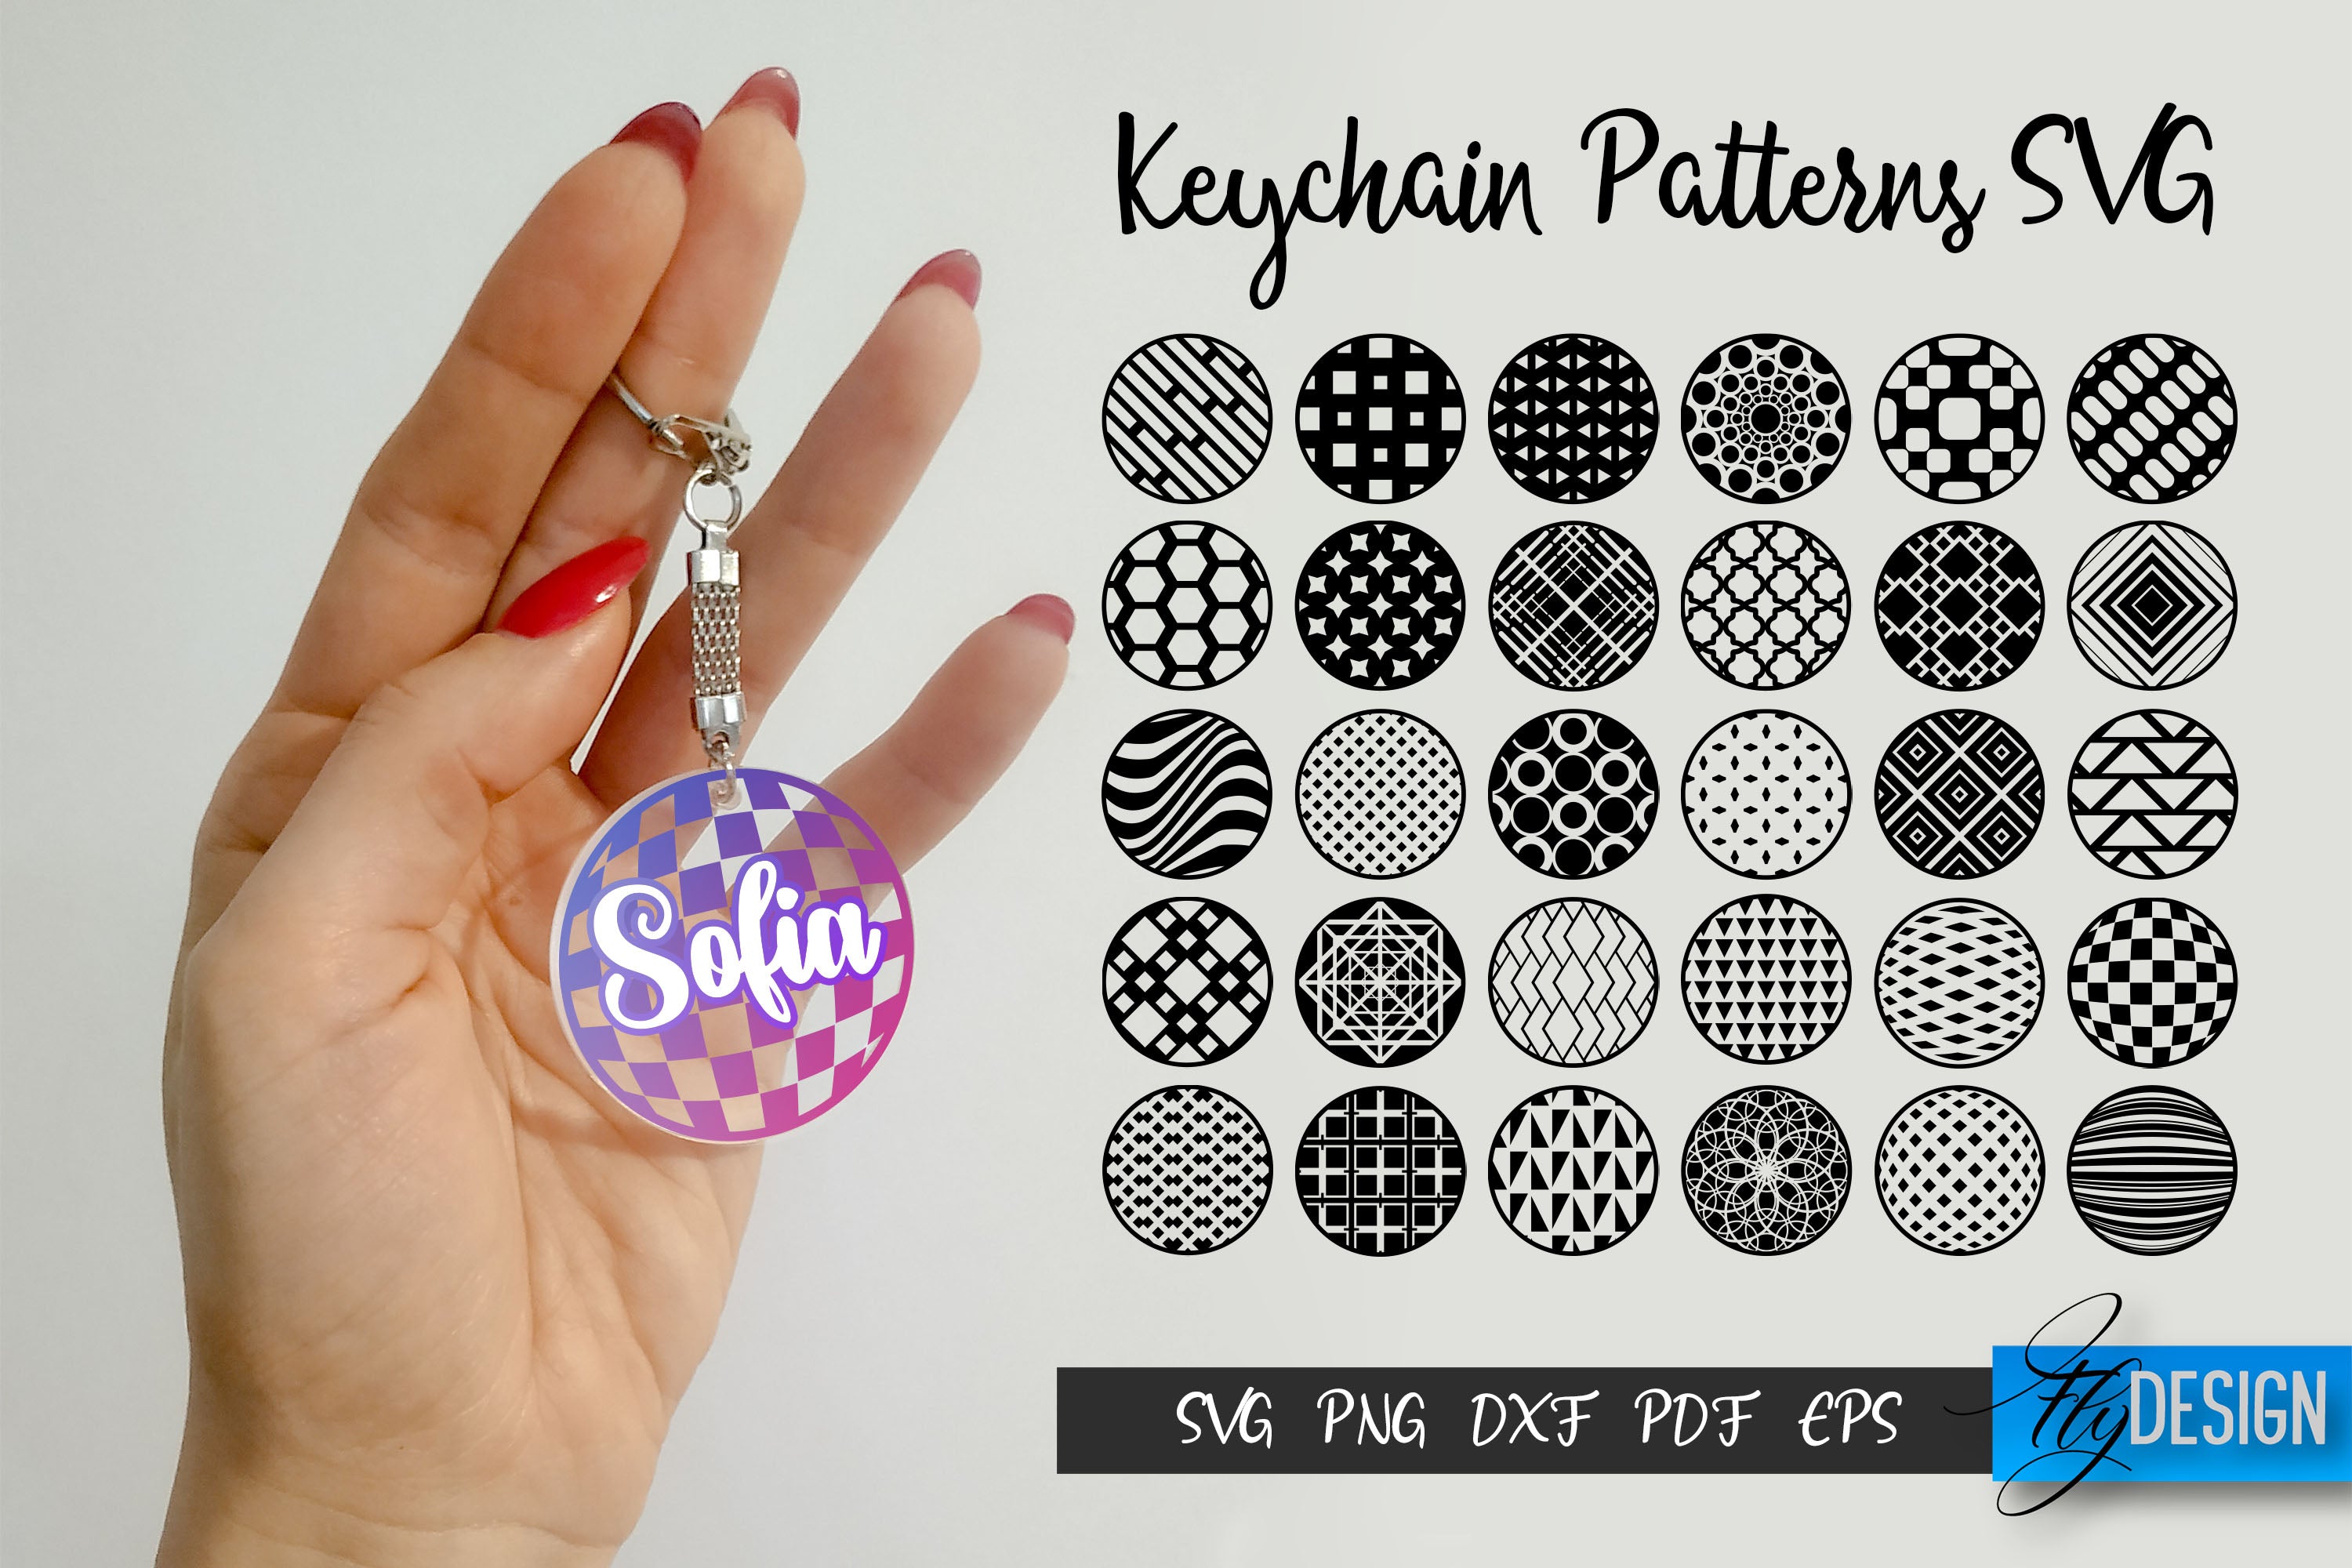 Keychain SVG Bundle - Circle Fames - So Fontsy